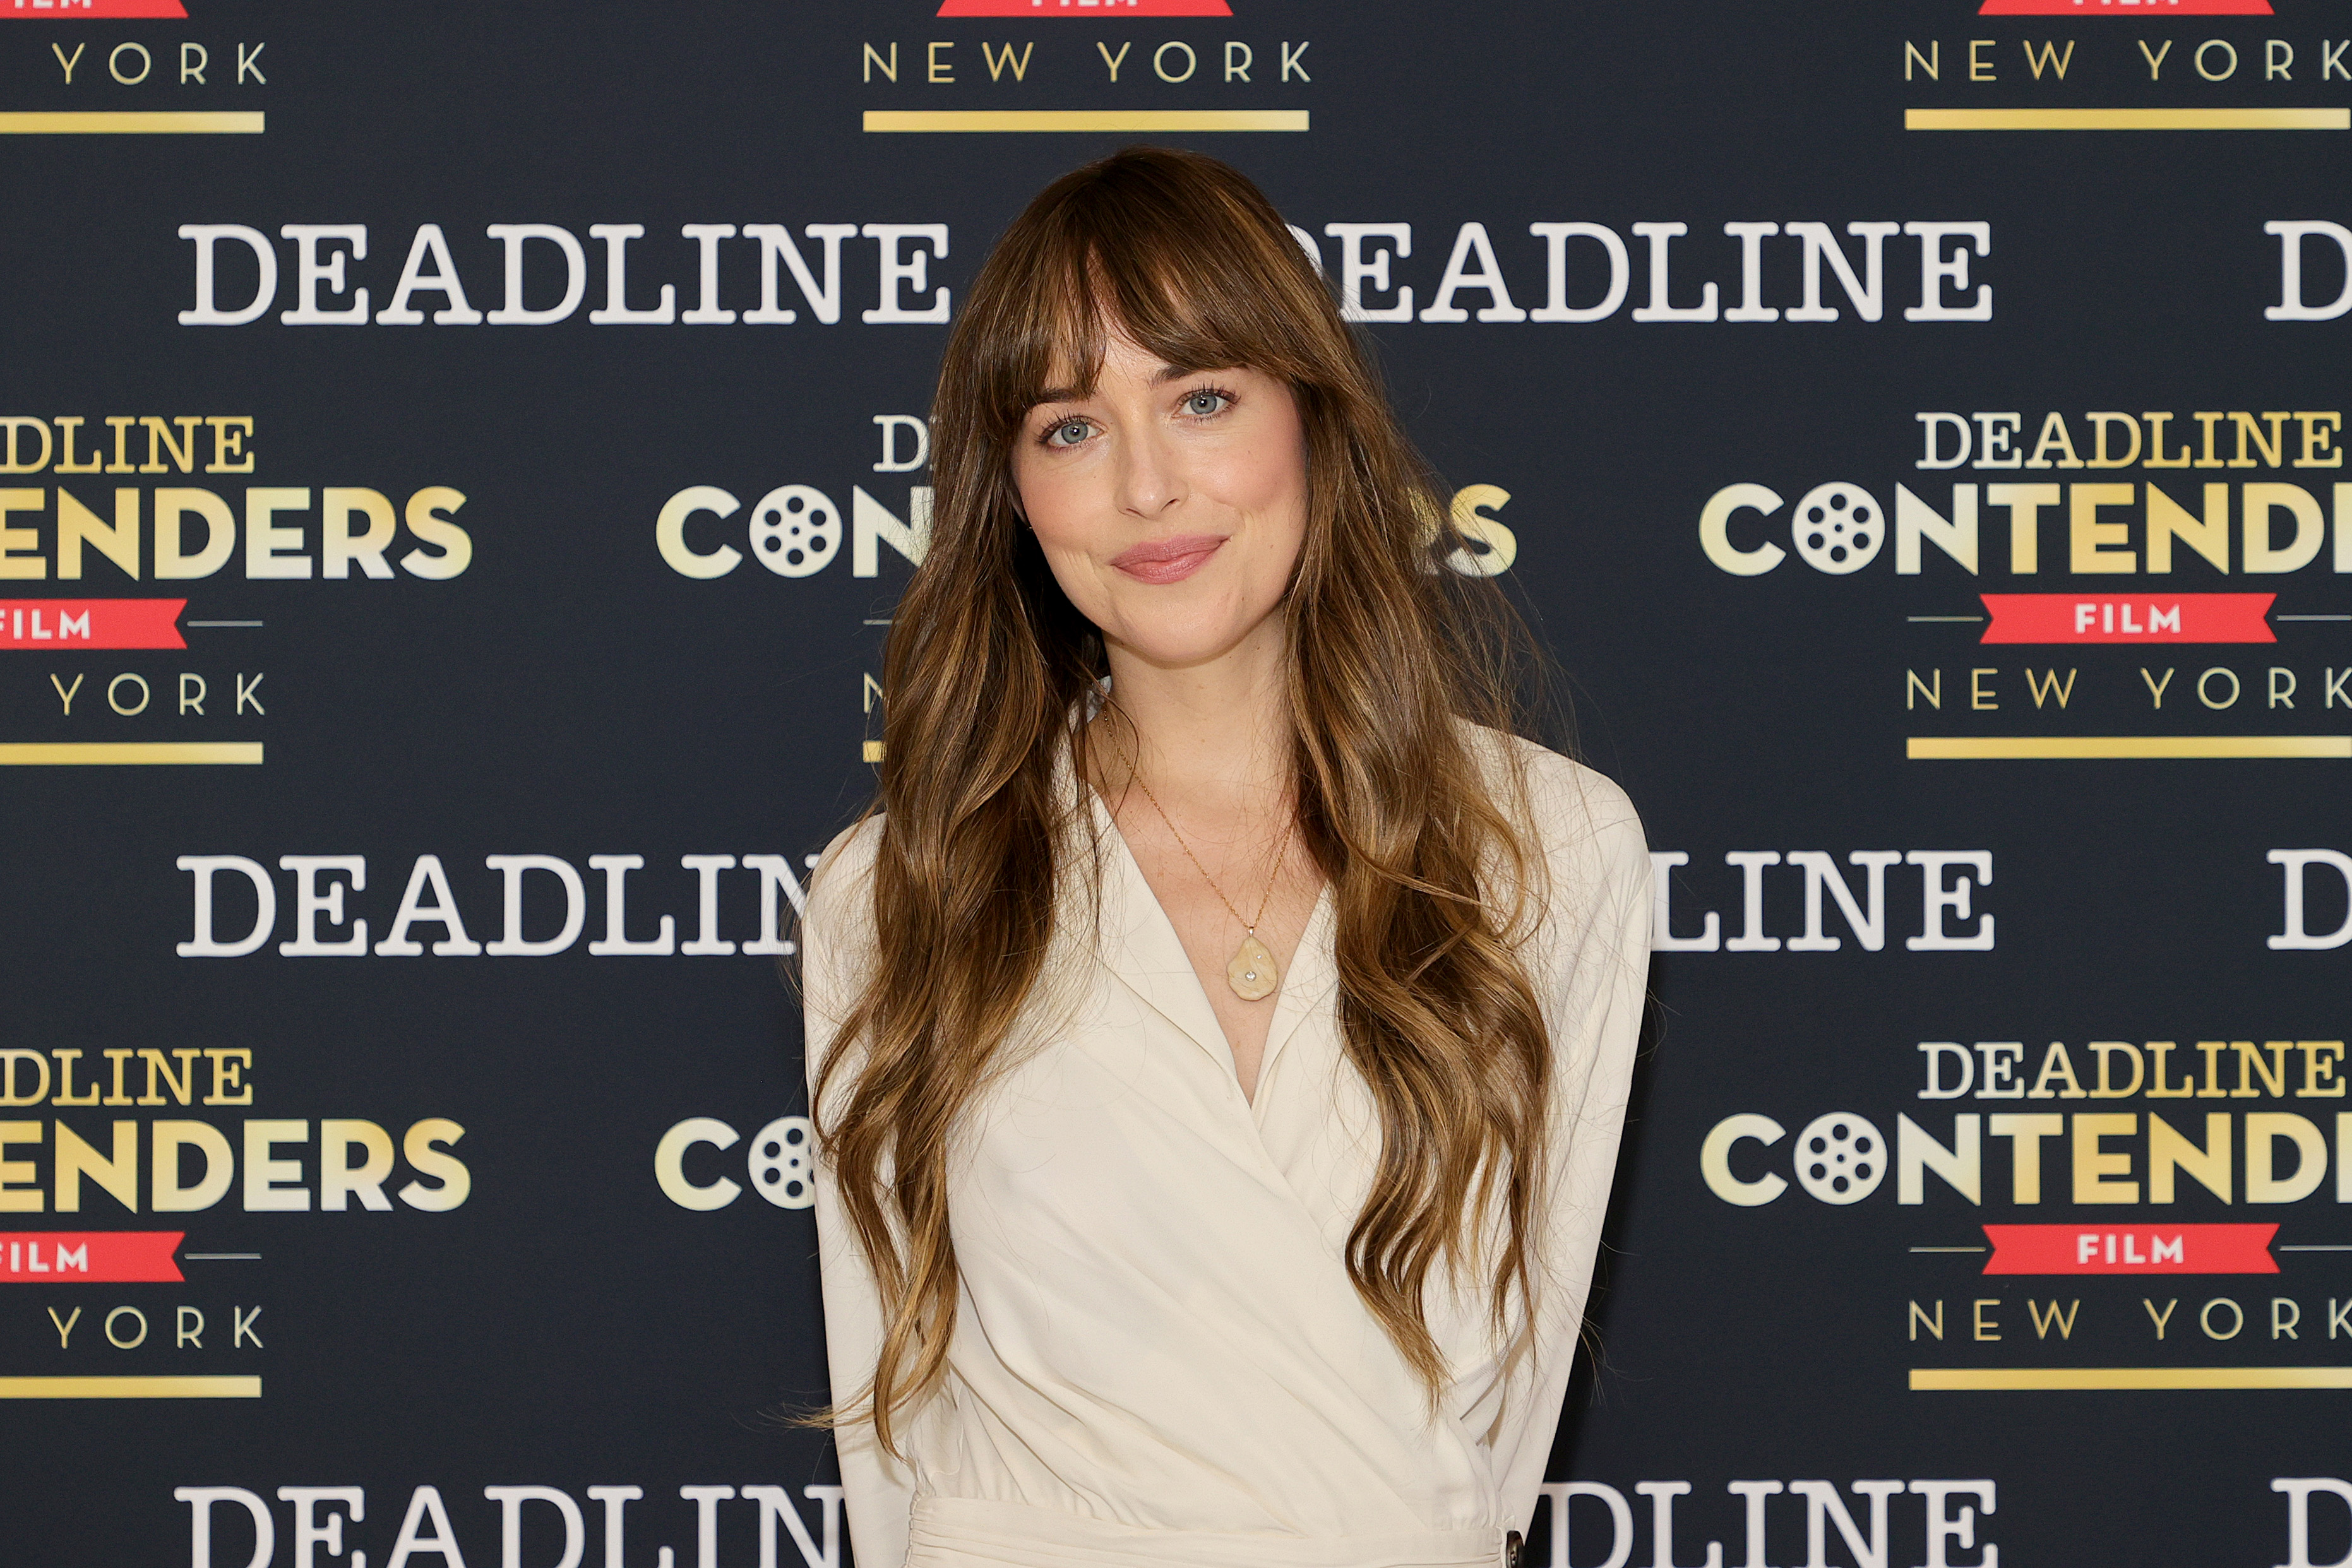 Dakota Johnson at the Deadline Contenders Film: New York in New York City, 2021 | Source: Getty Images